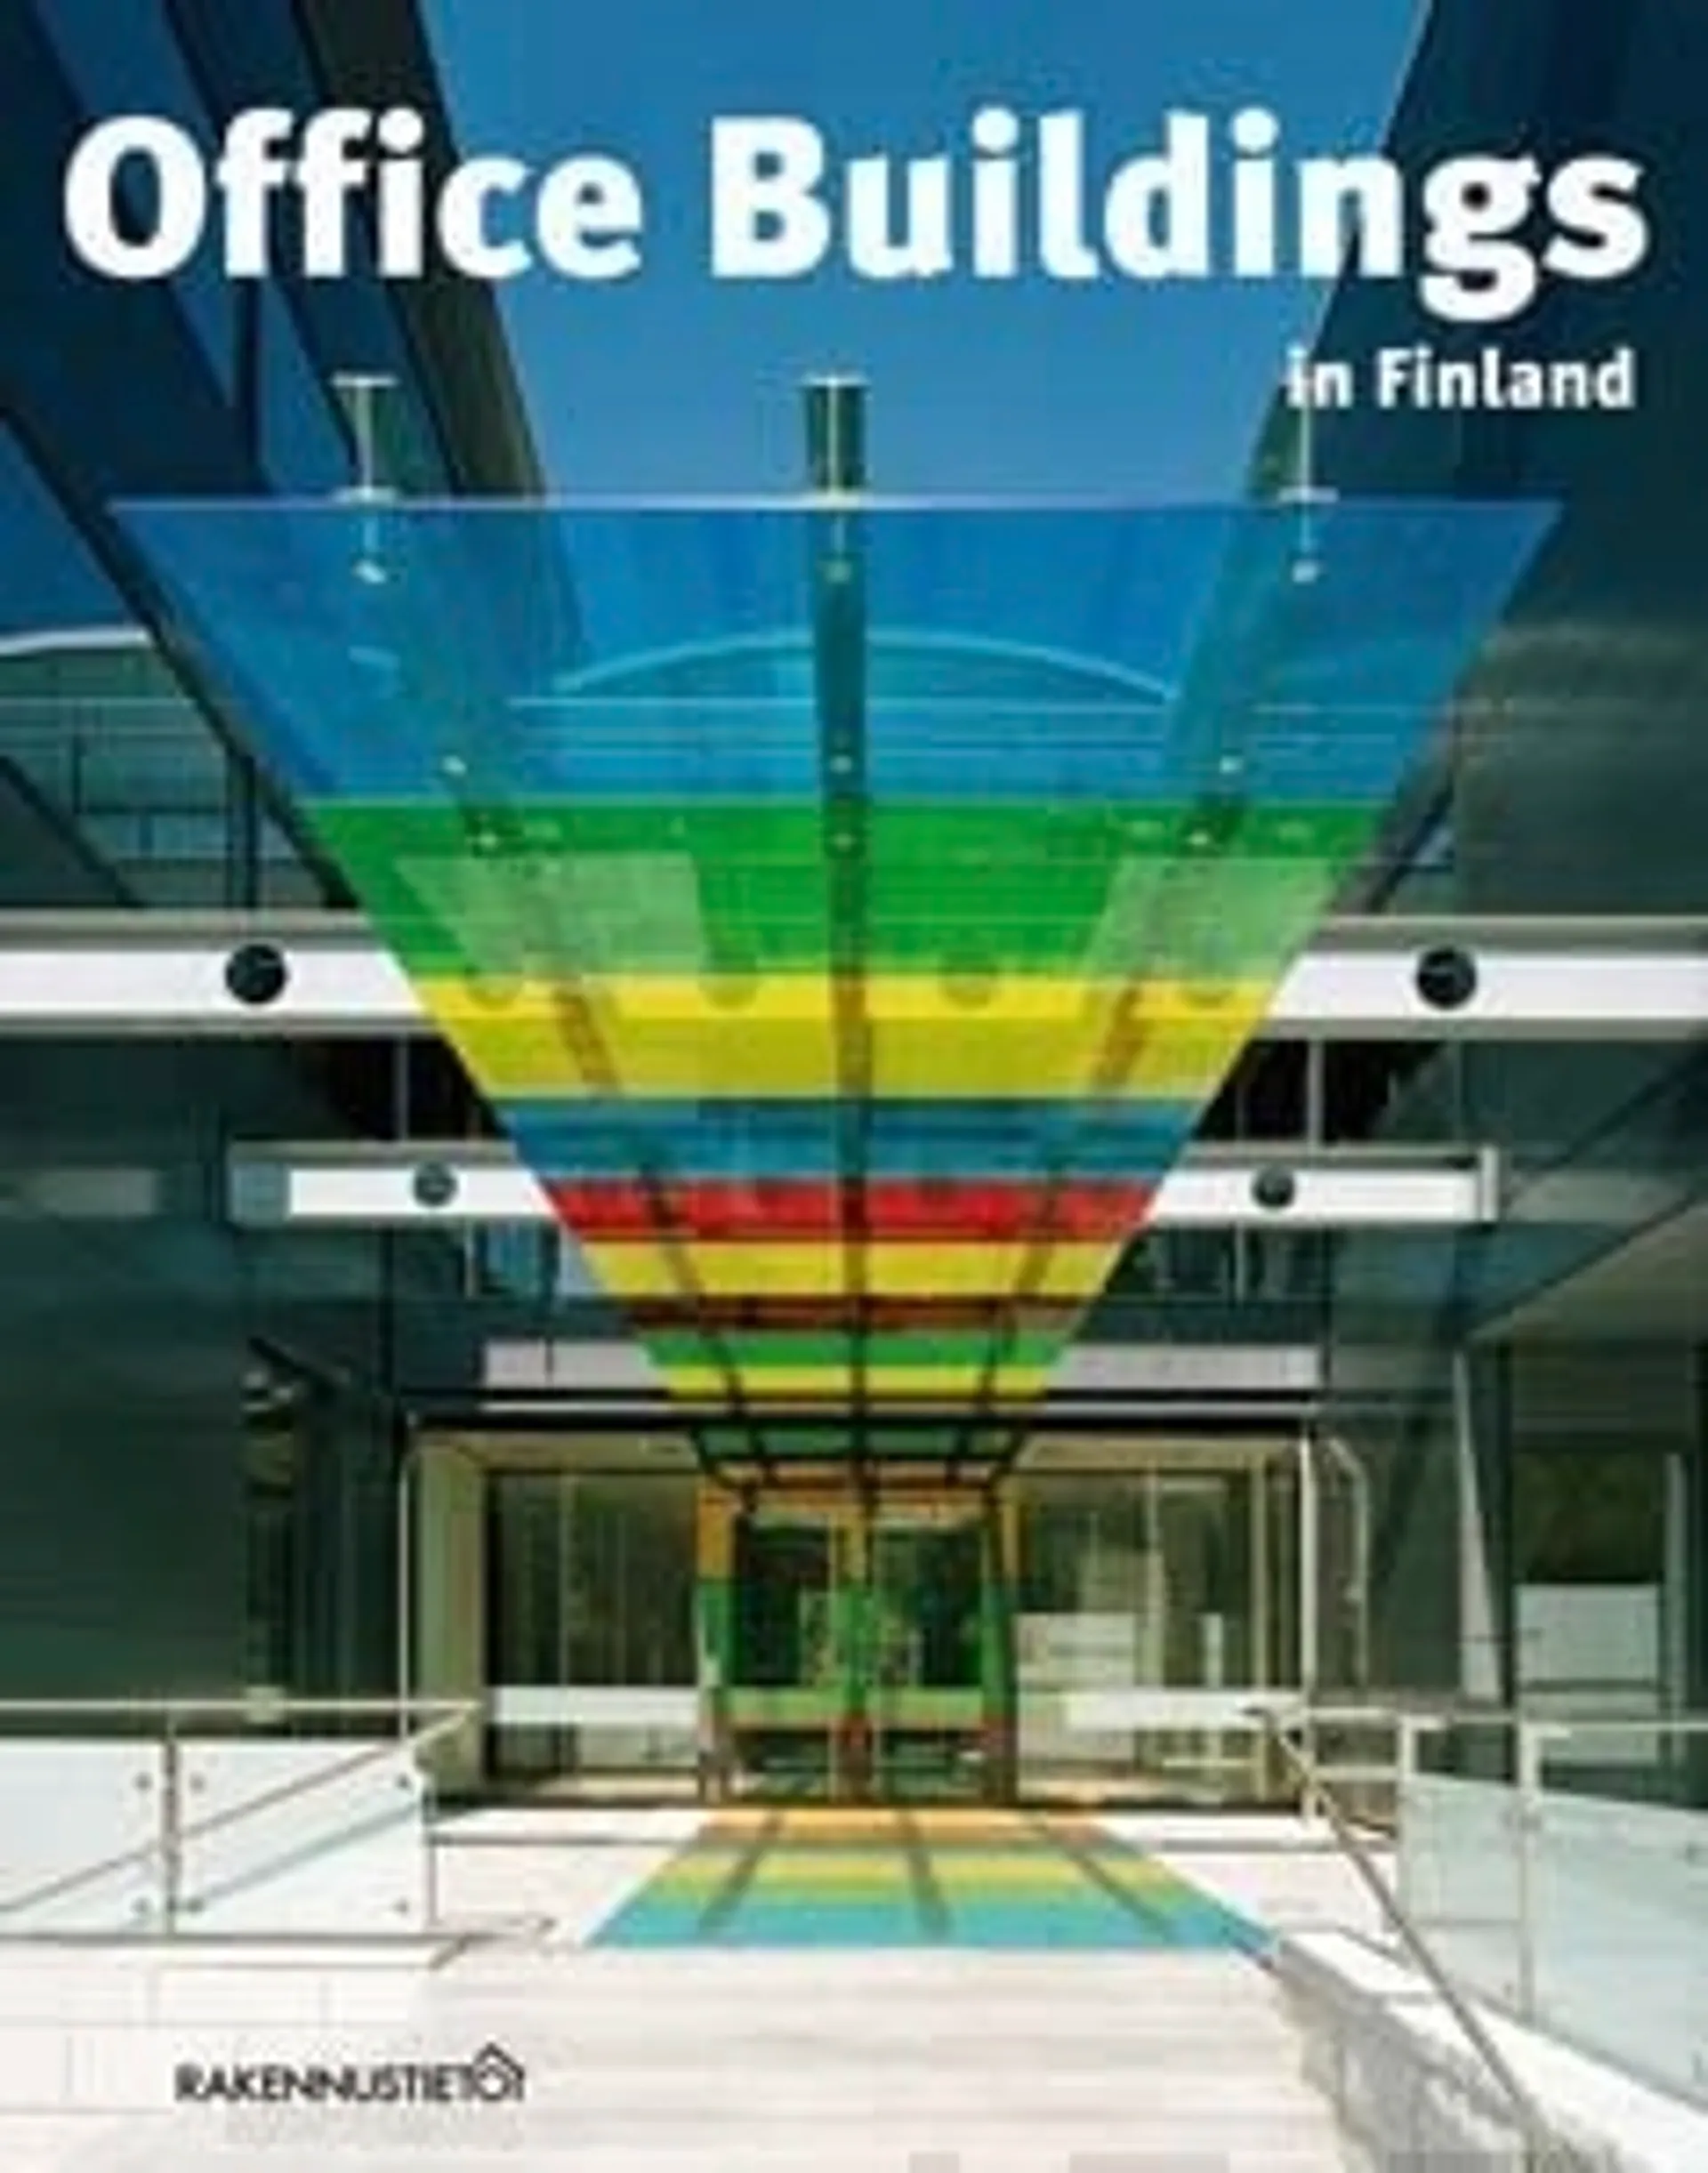 Office buildings in Finland